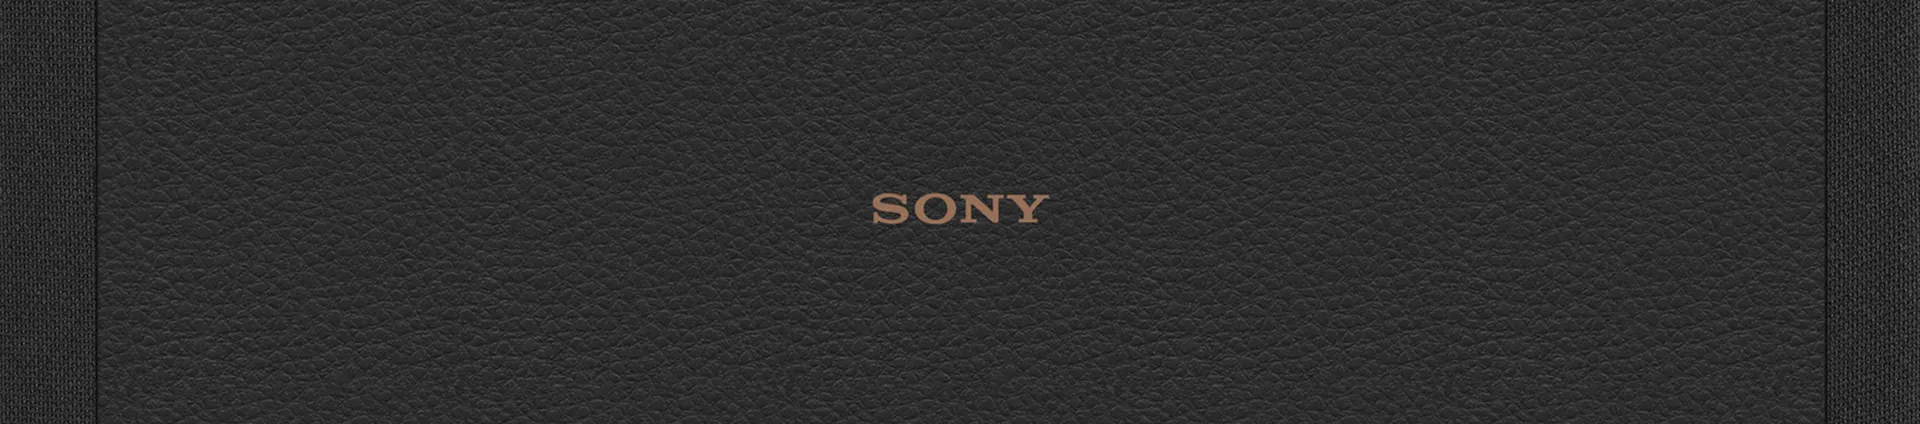 Header Black Friday Sony